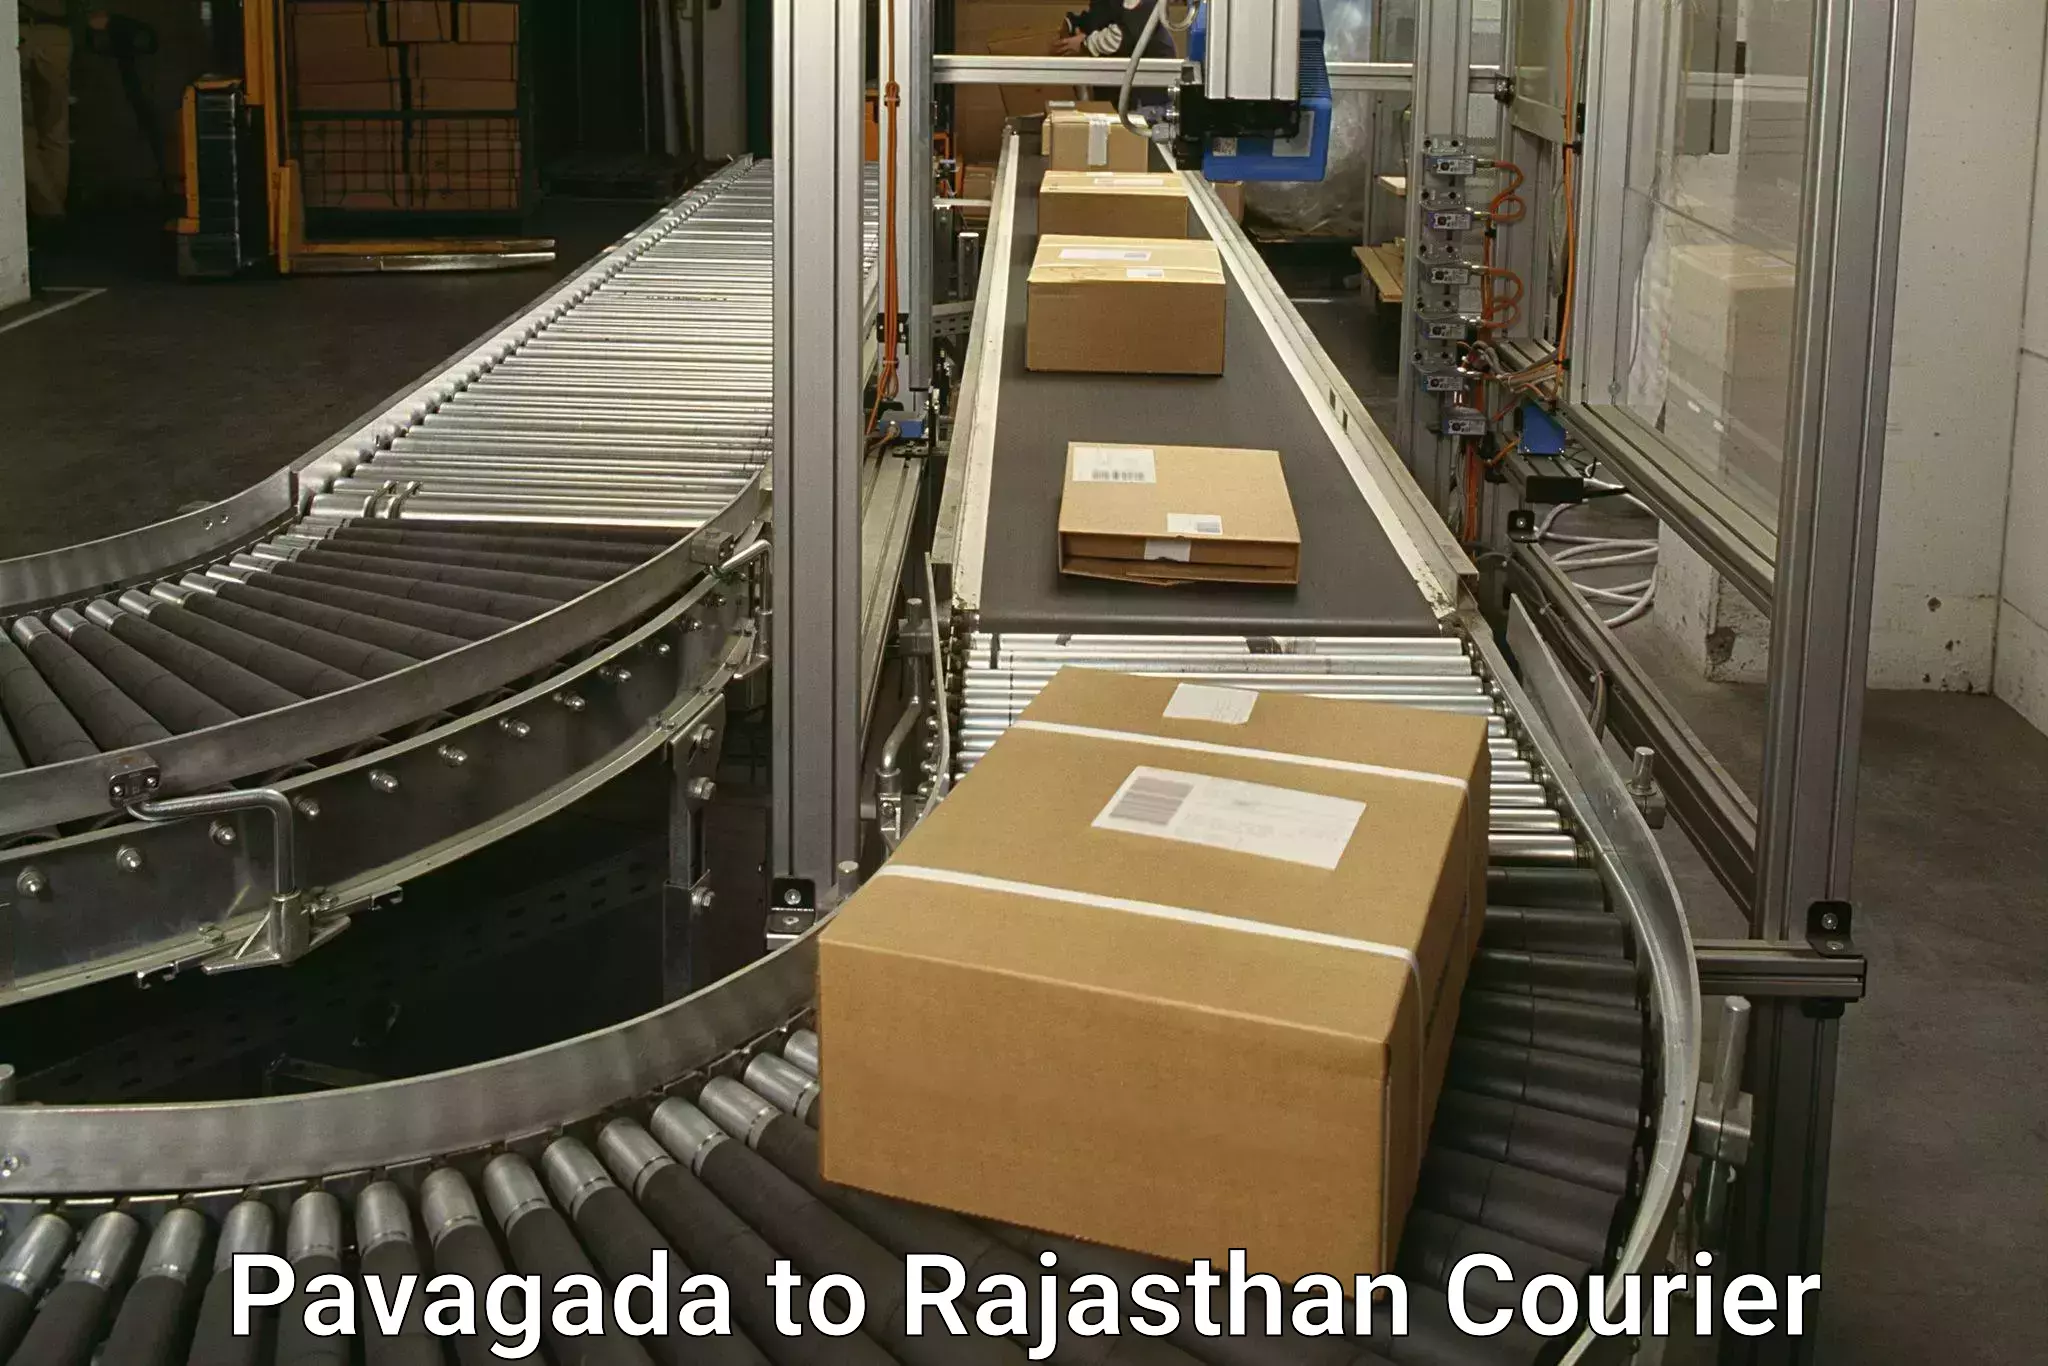 Courier service comparison Pavagada to Hanumangarh